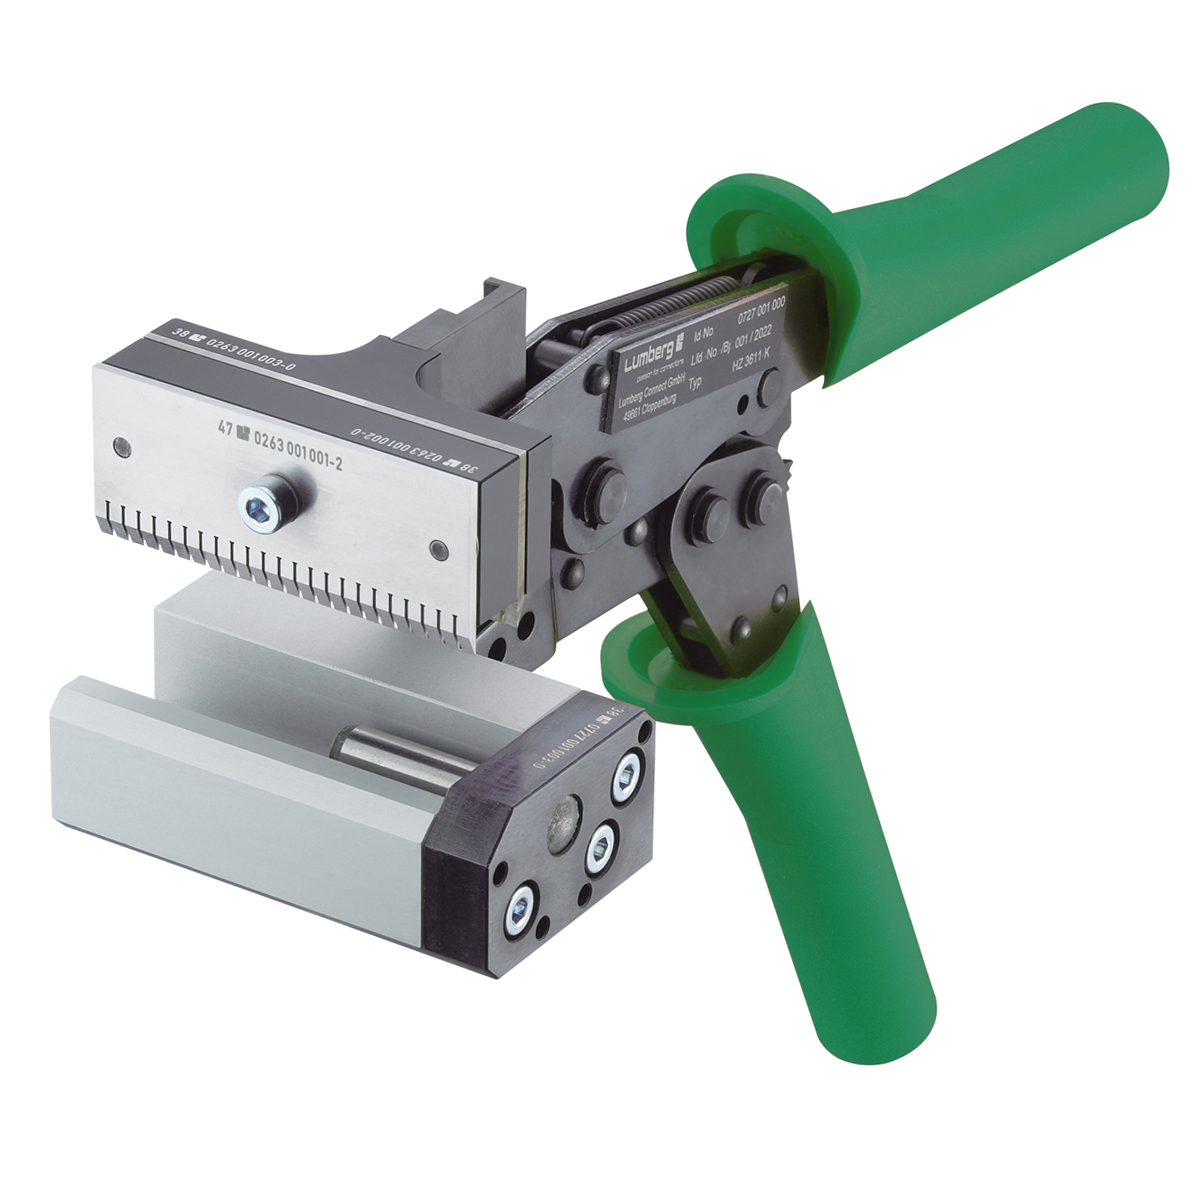 Lumberg: HZ3611-K (Series 97 | Tools and harnessing machines)